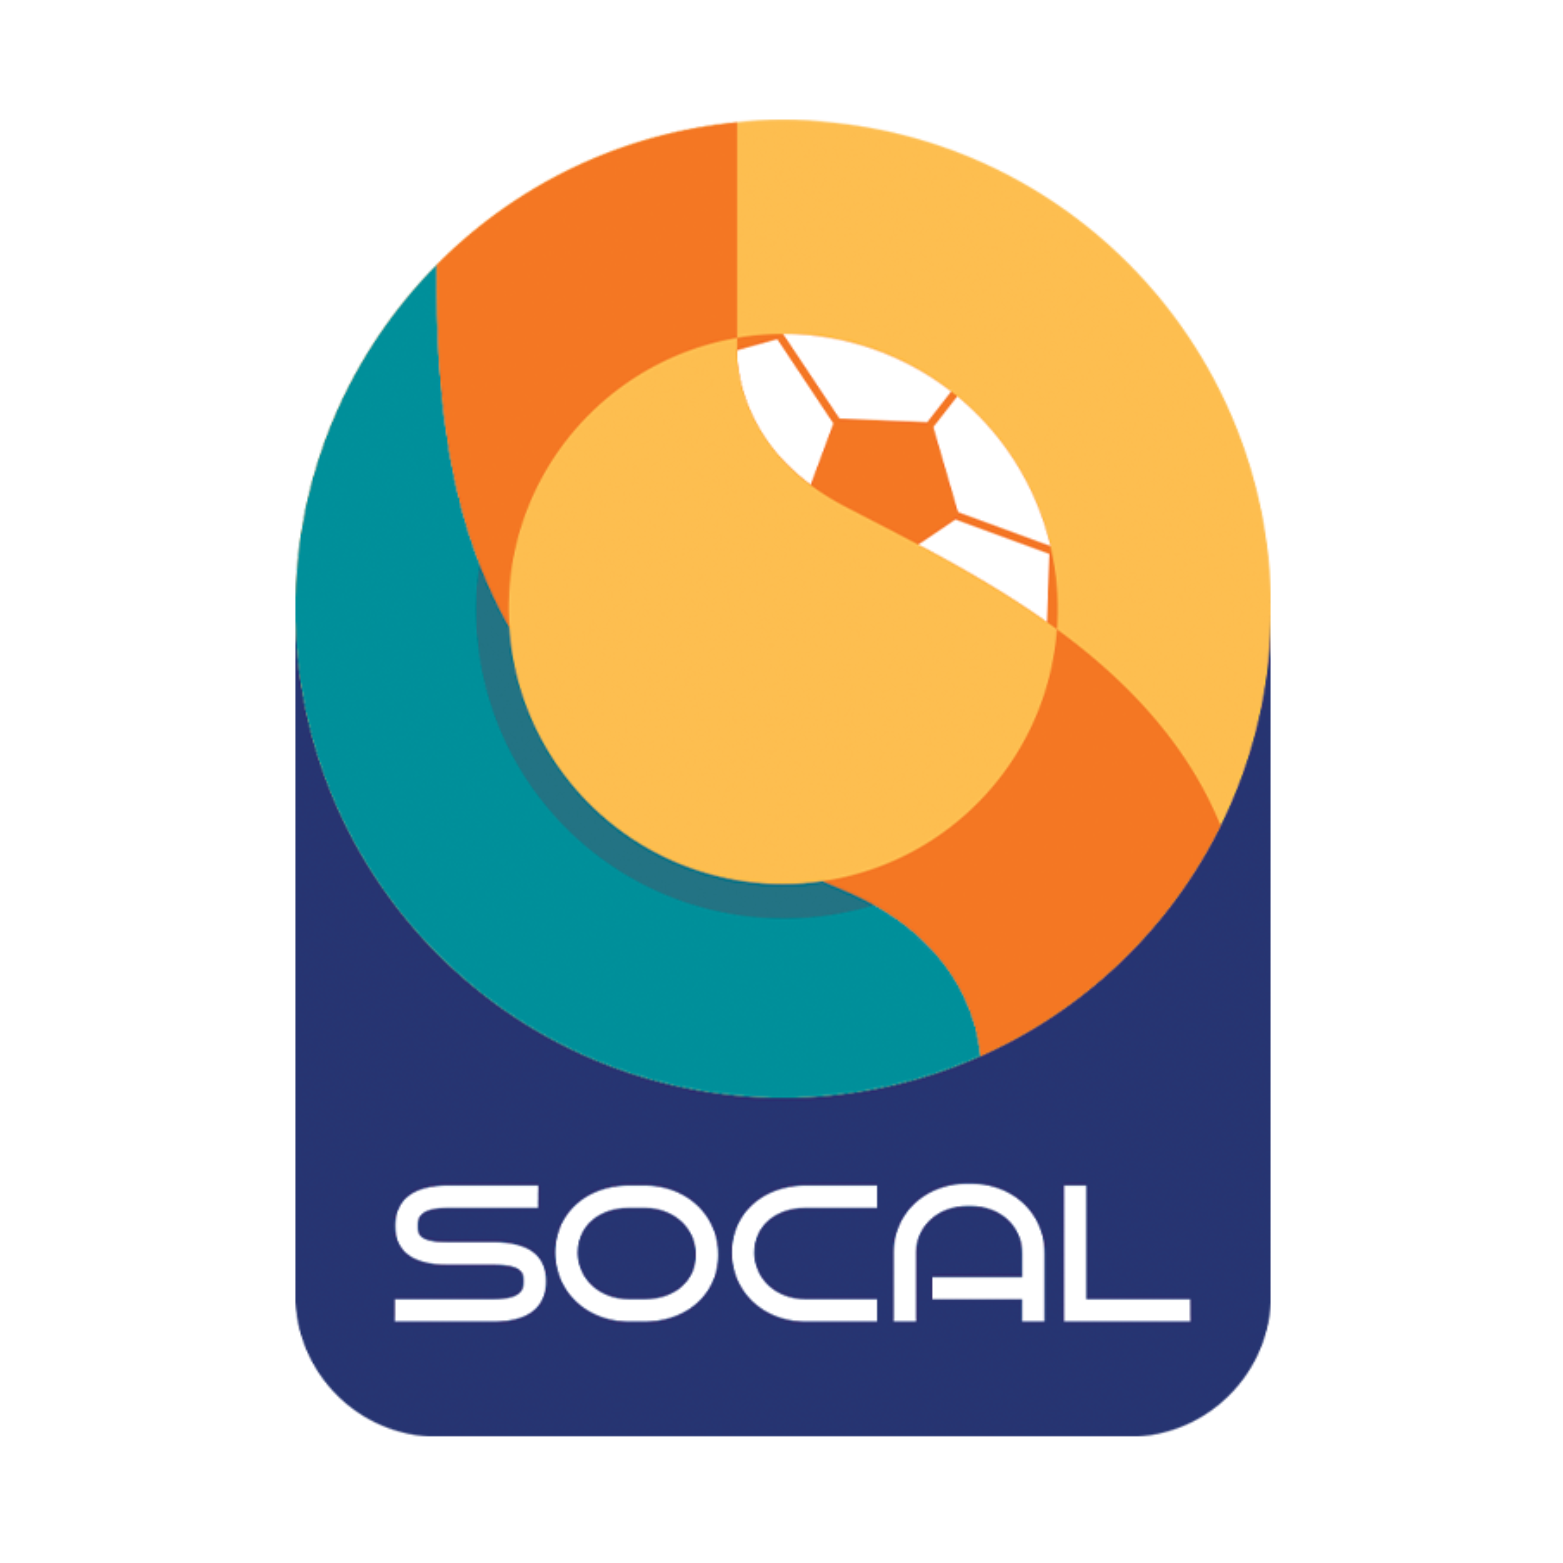 Socal logo